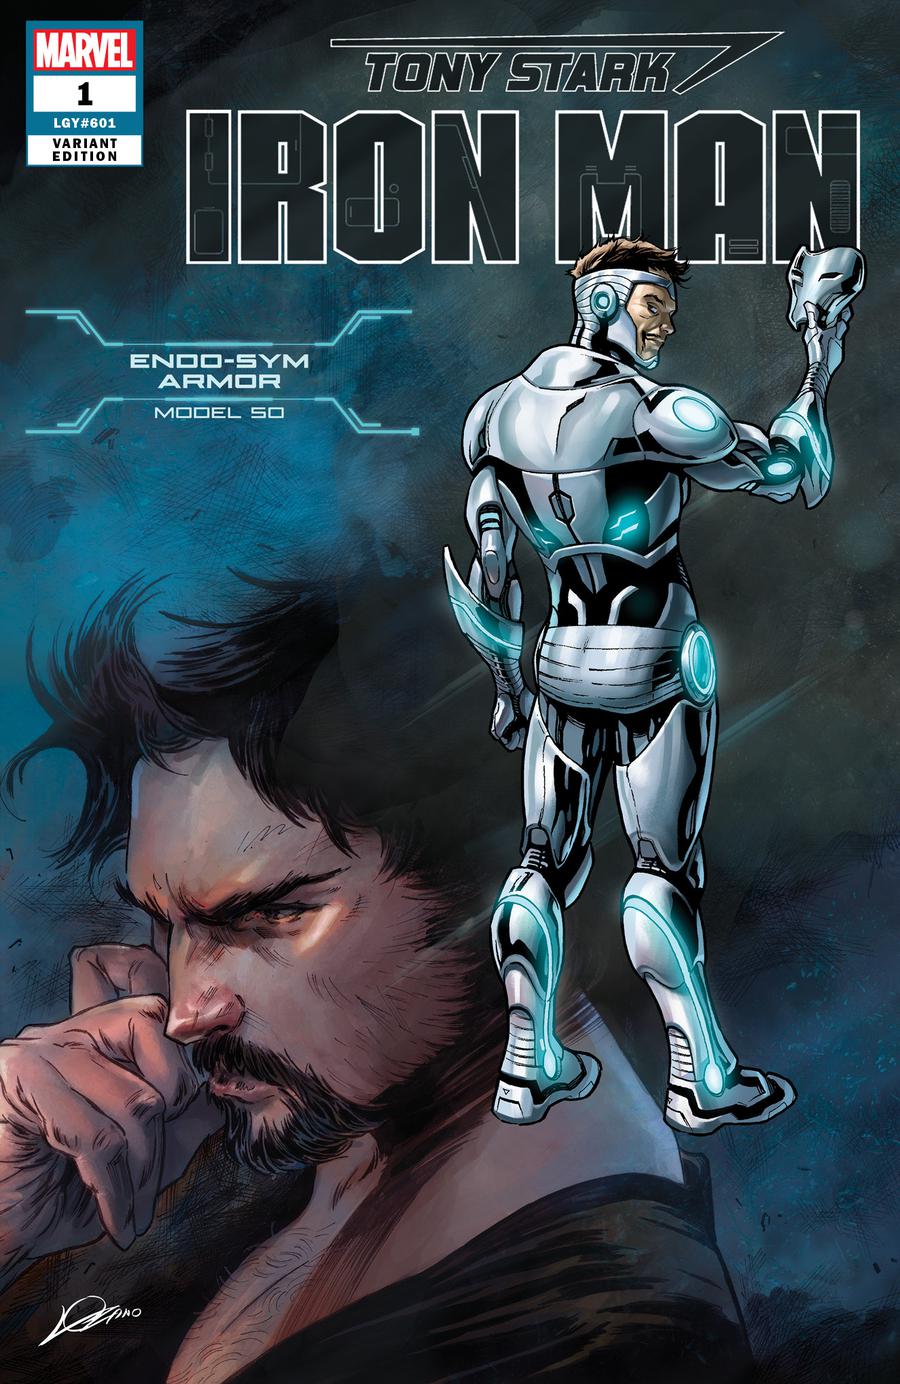 Tony Stark Iron Man #1 Cover S Variant Alexander Lozano & Valerio Schiti Model 50 Endo-Sym Armor Cover